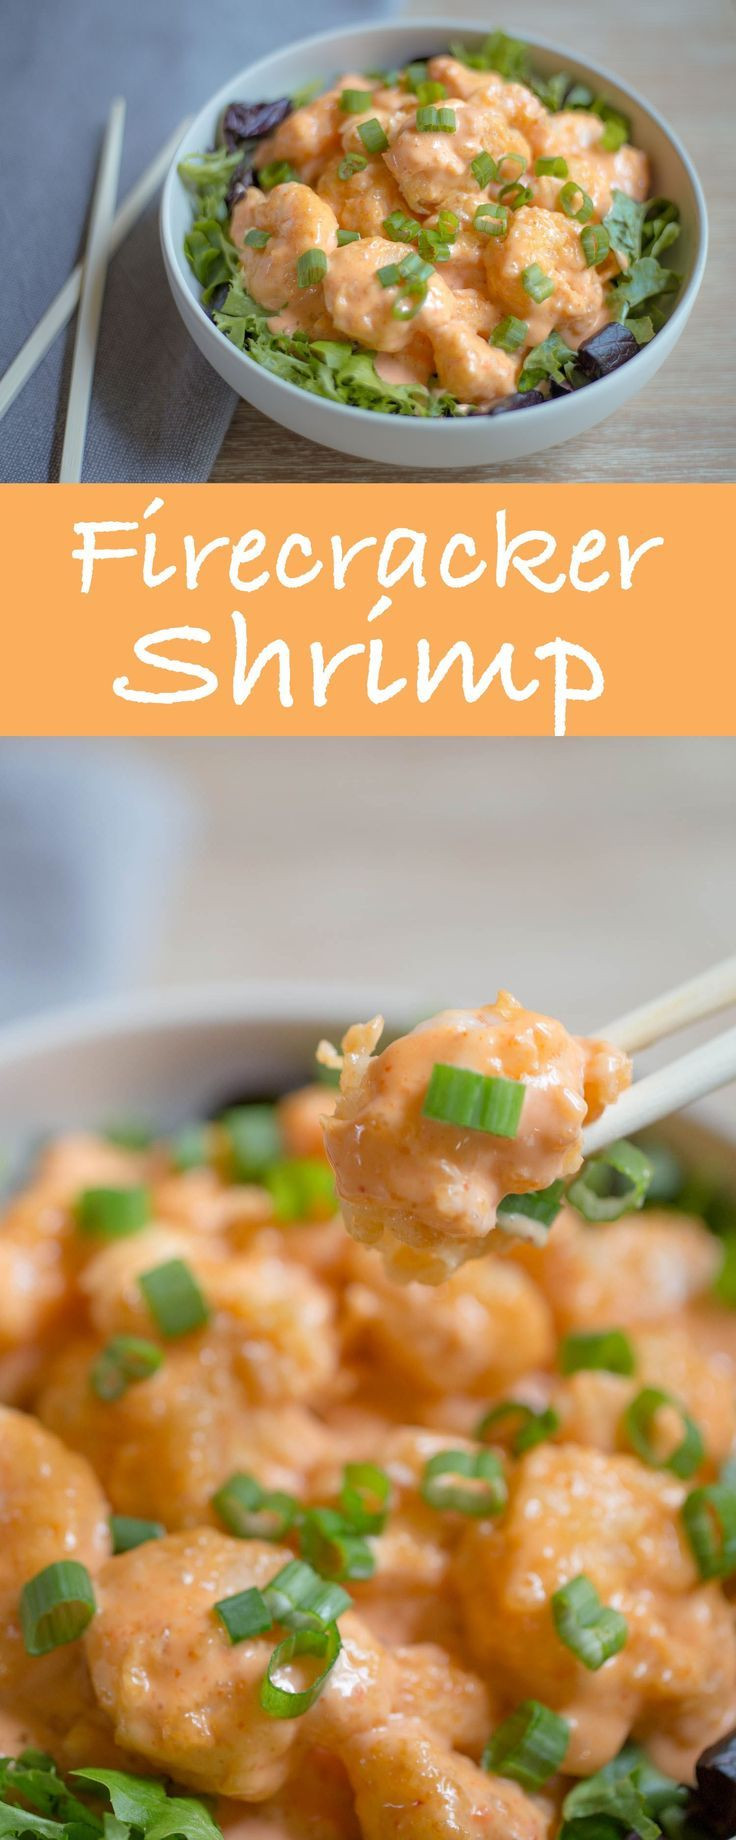 Firecracker Shrimp Appetizer Recipe
 Firecracker Shrimp Recipe